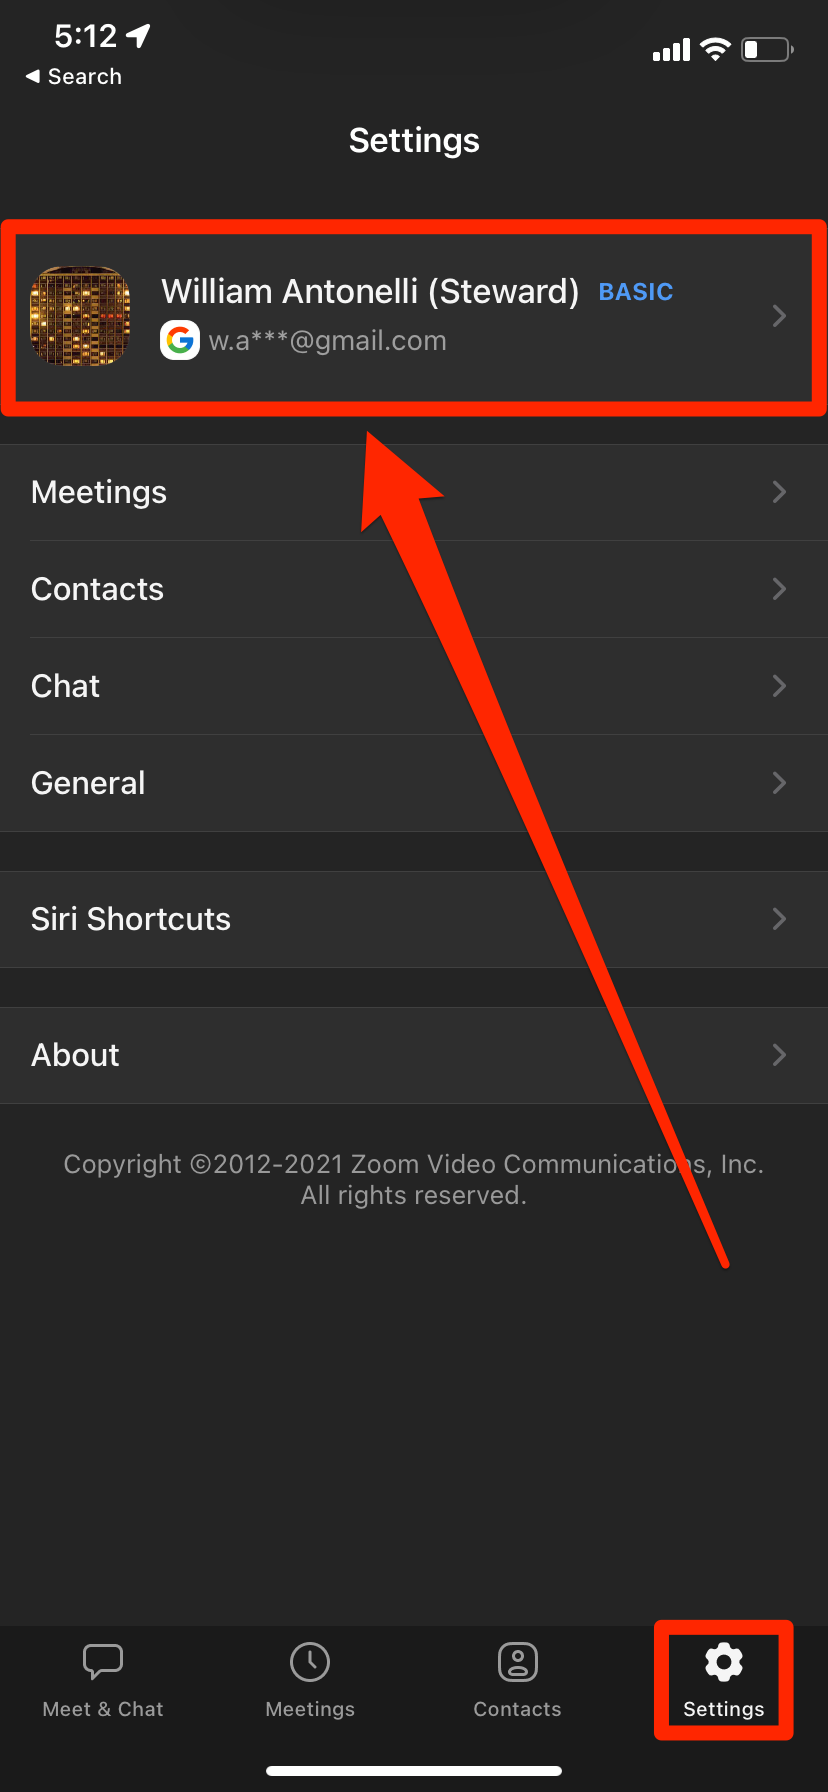 The Settings menu in the Zoom iPhone app.